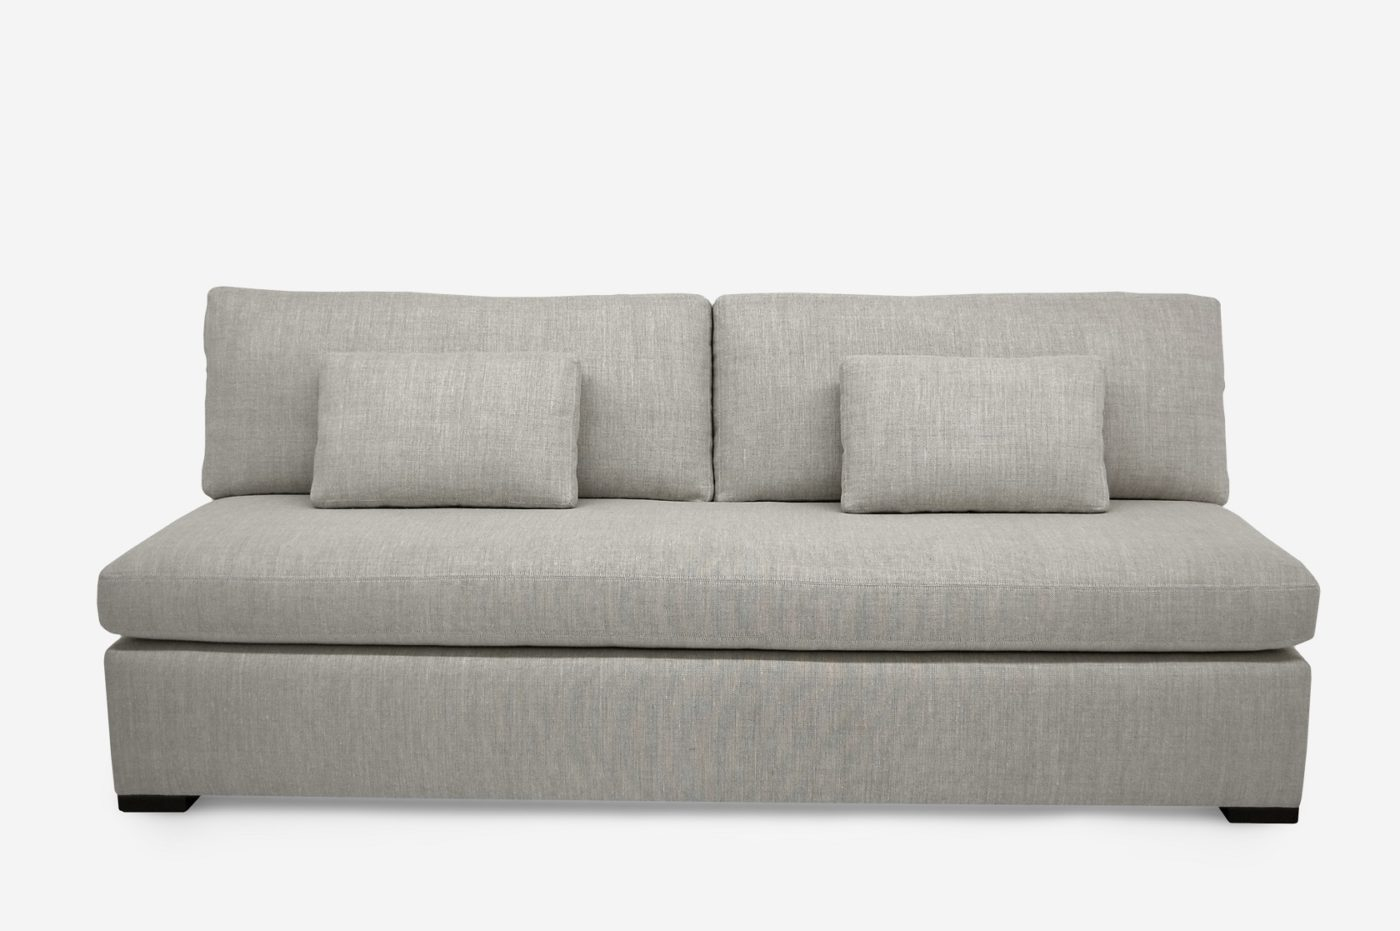 armless sofa bed australia